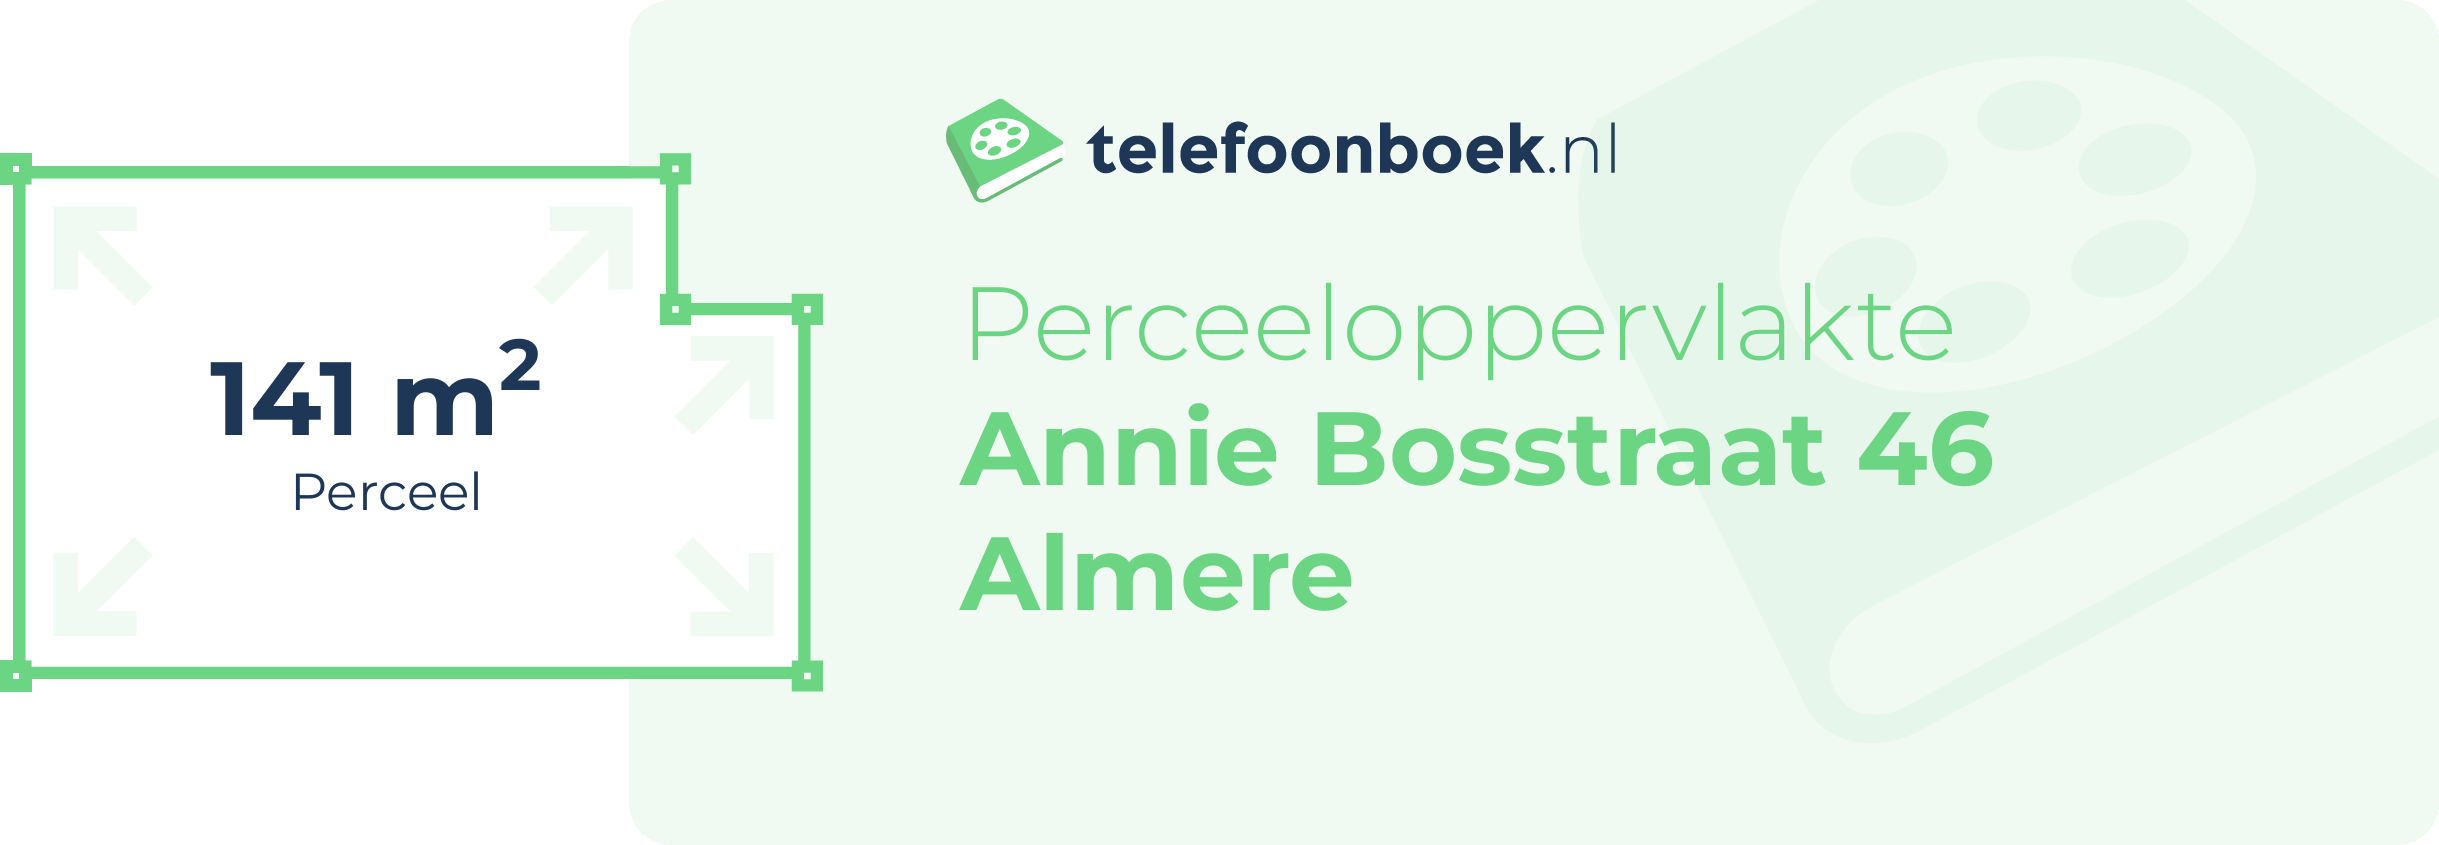 Perceeloppervlakte Annie Bosstraat 46 Almere